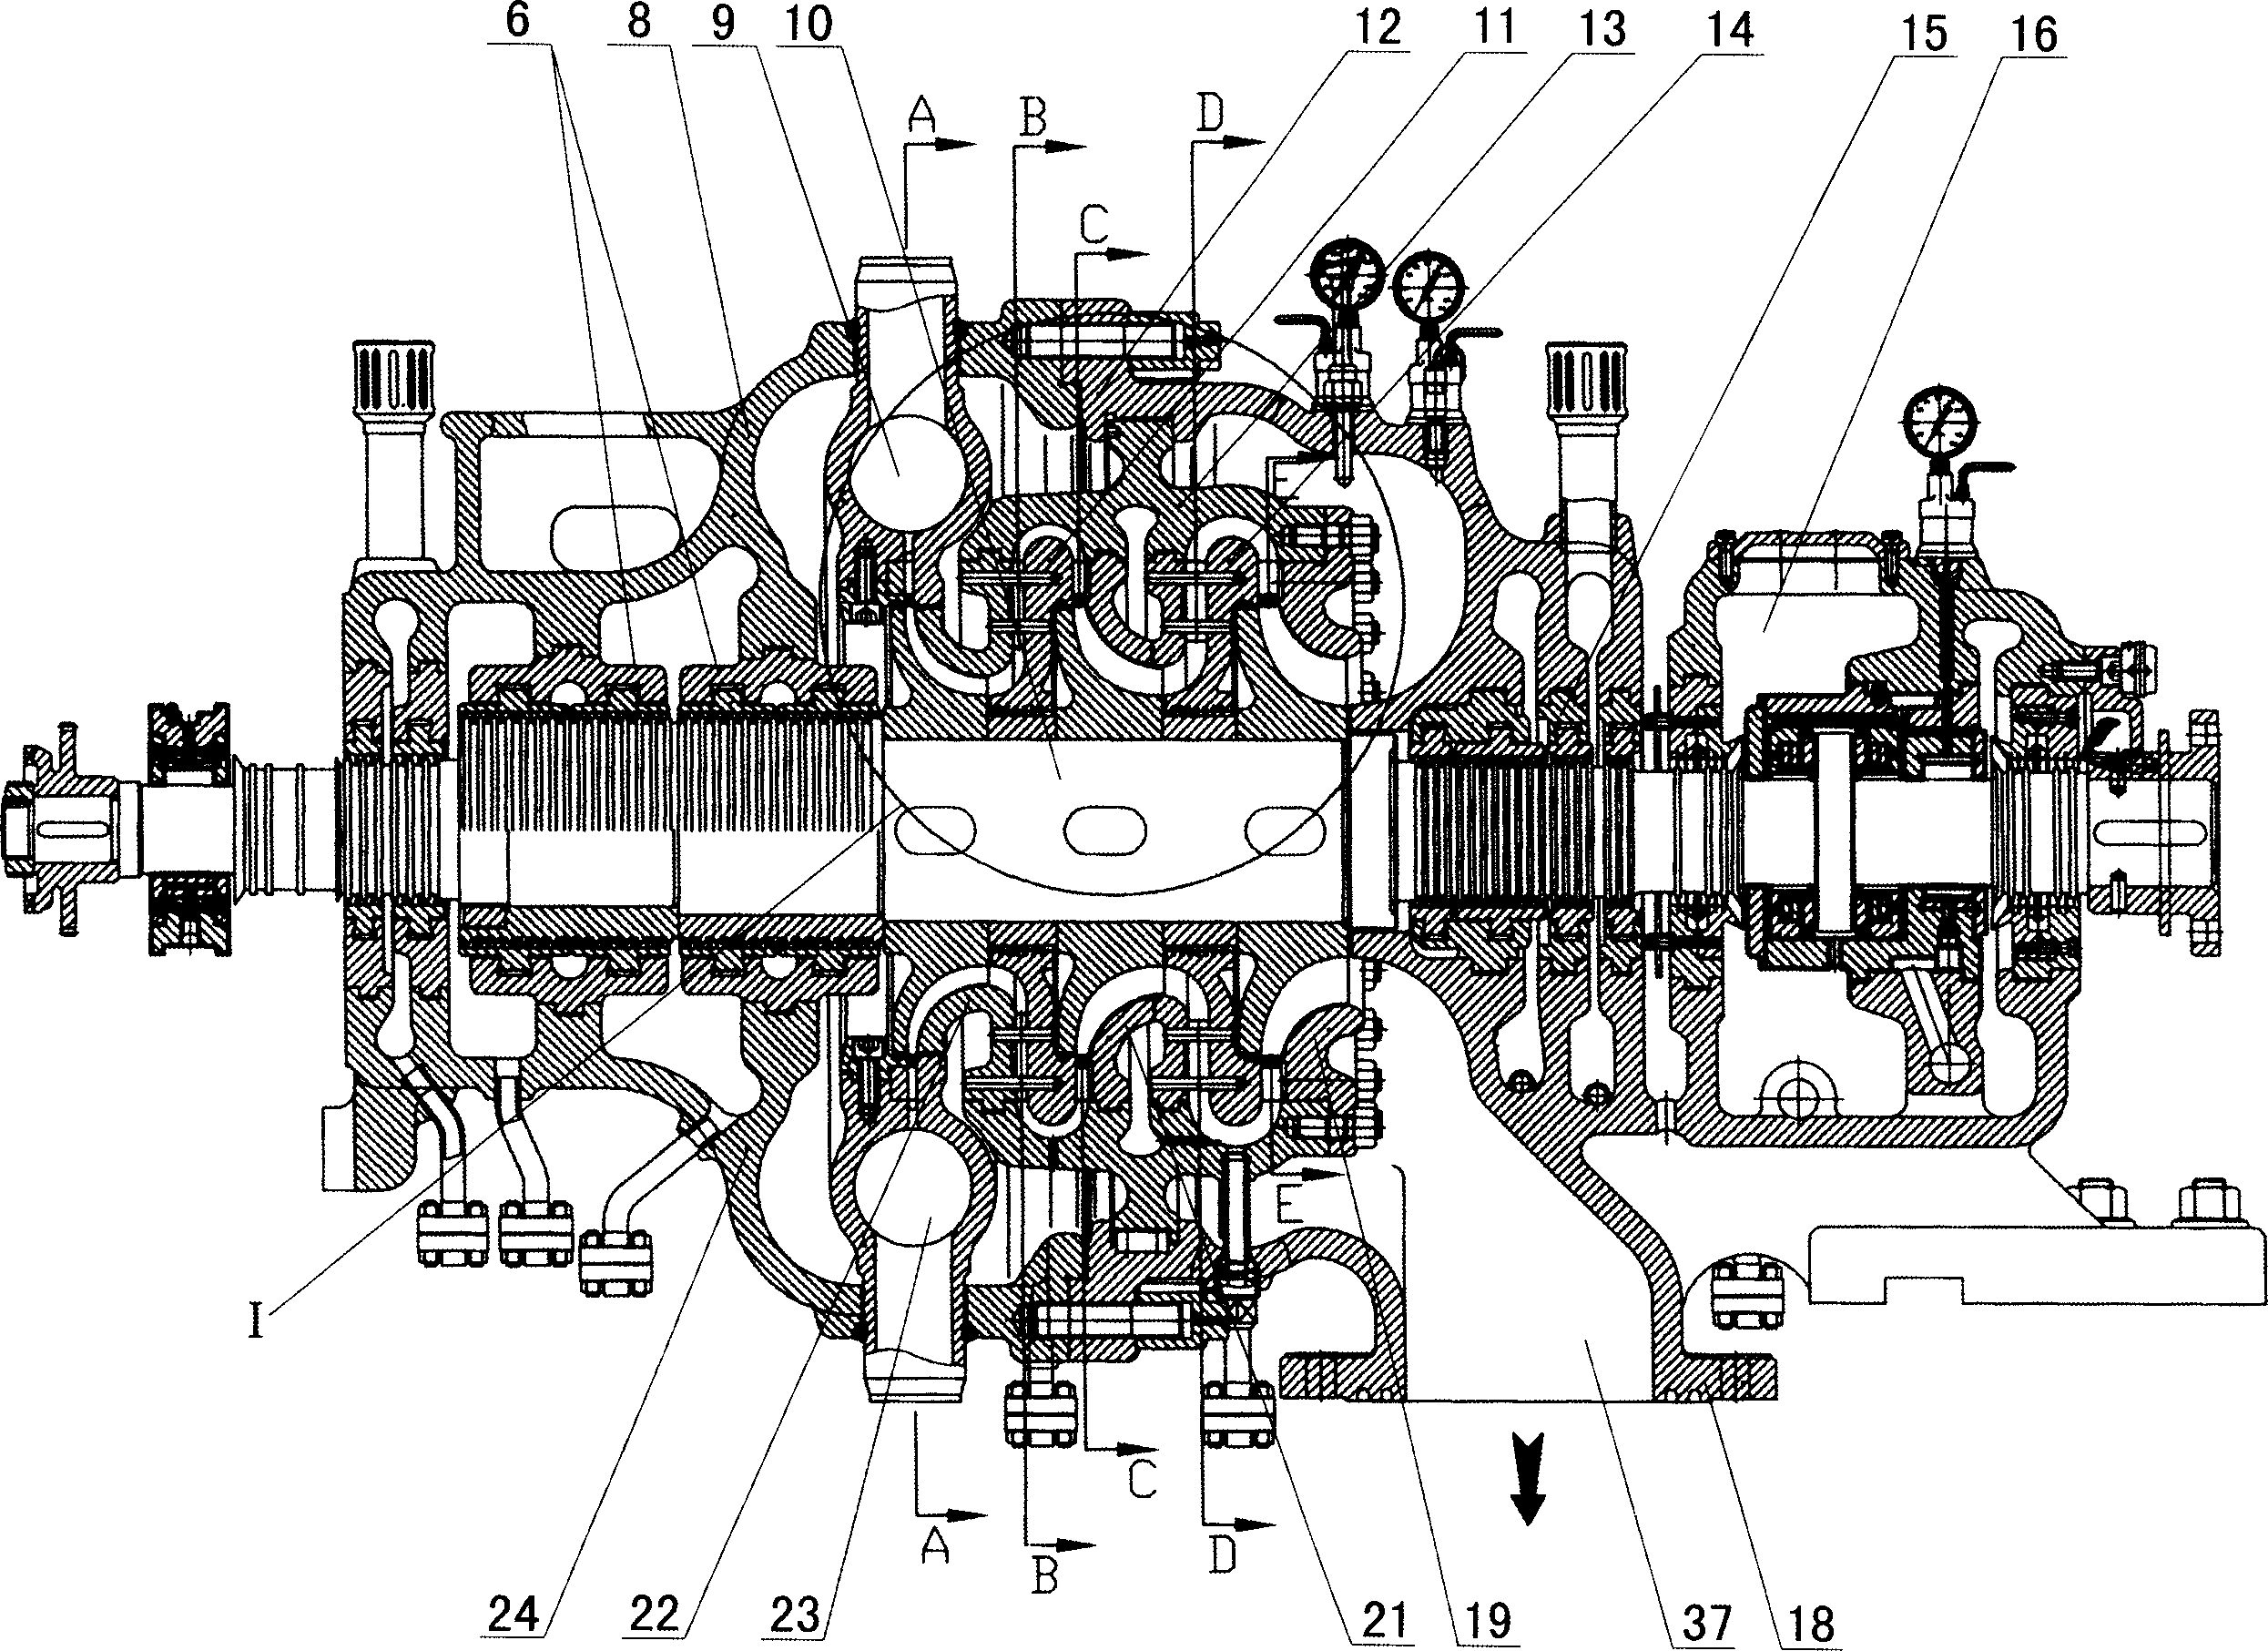 Radial-flow steam turbine